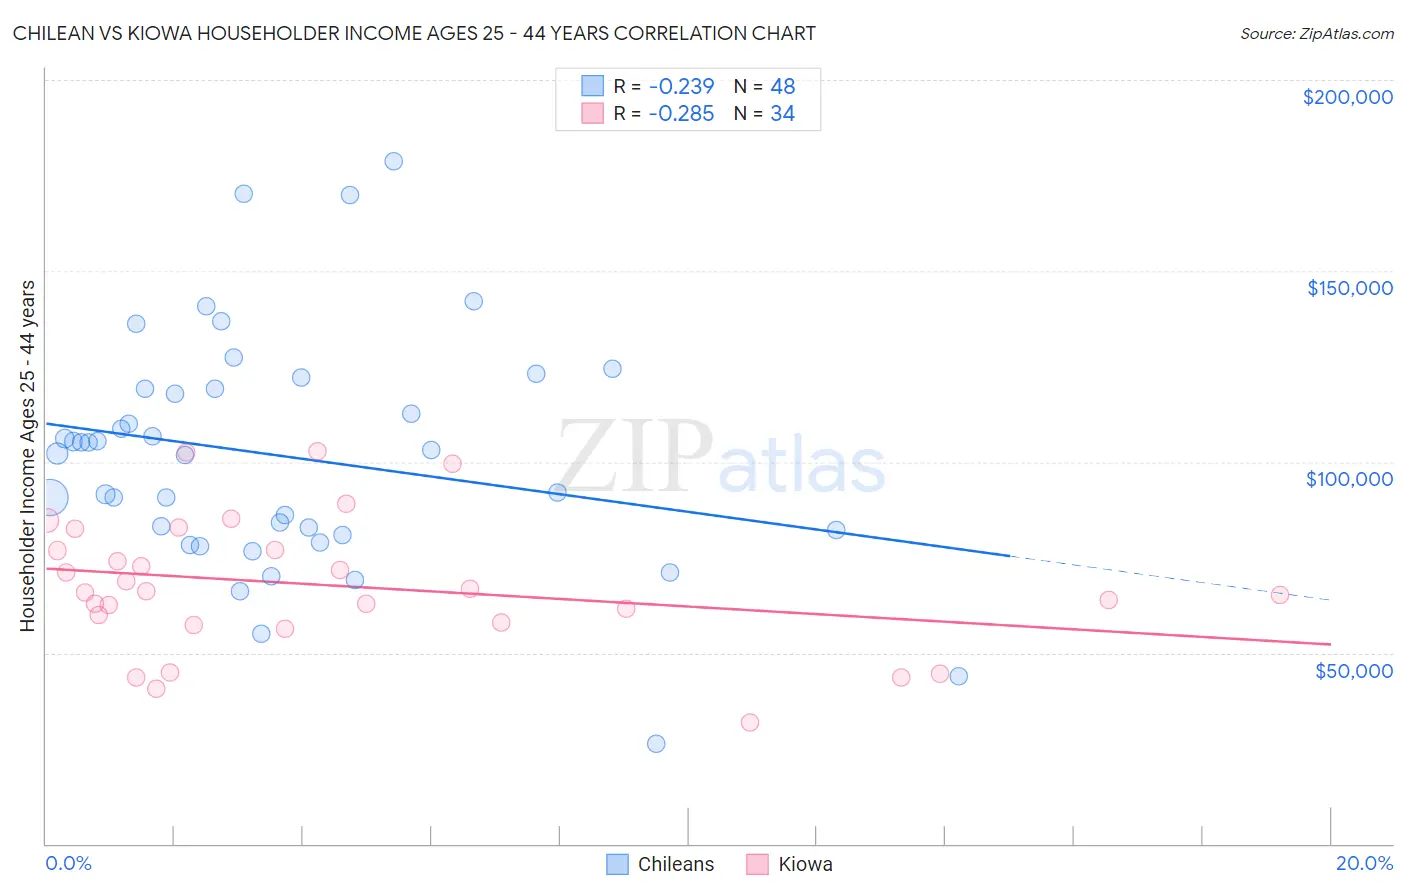 Chilean vs Kiowa Householder Income Ages 25 - 44 years